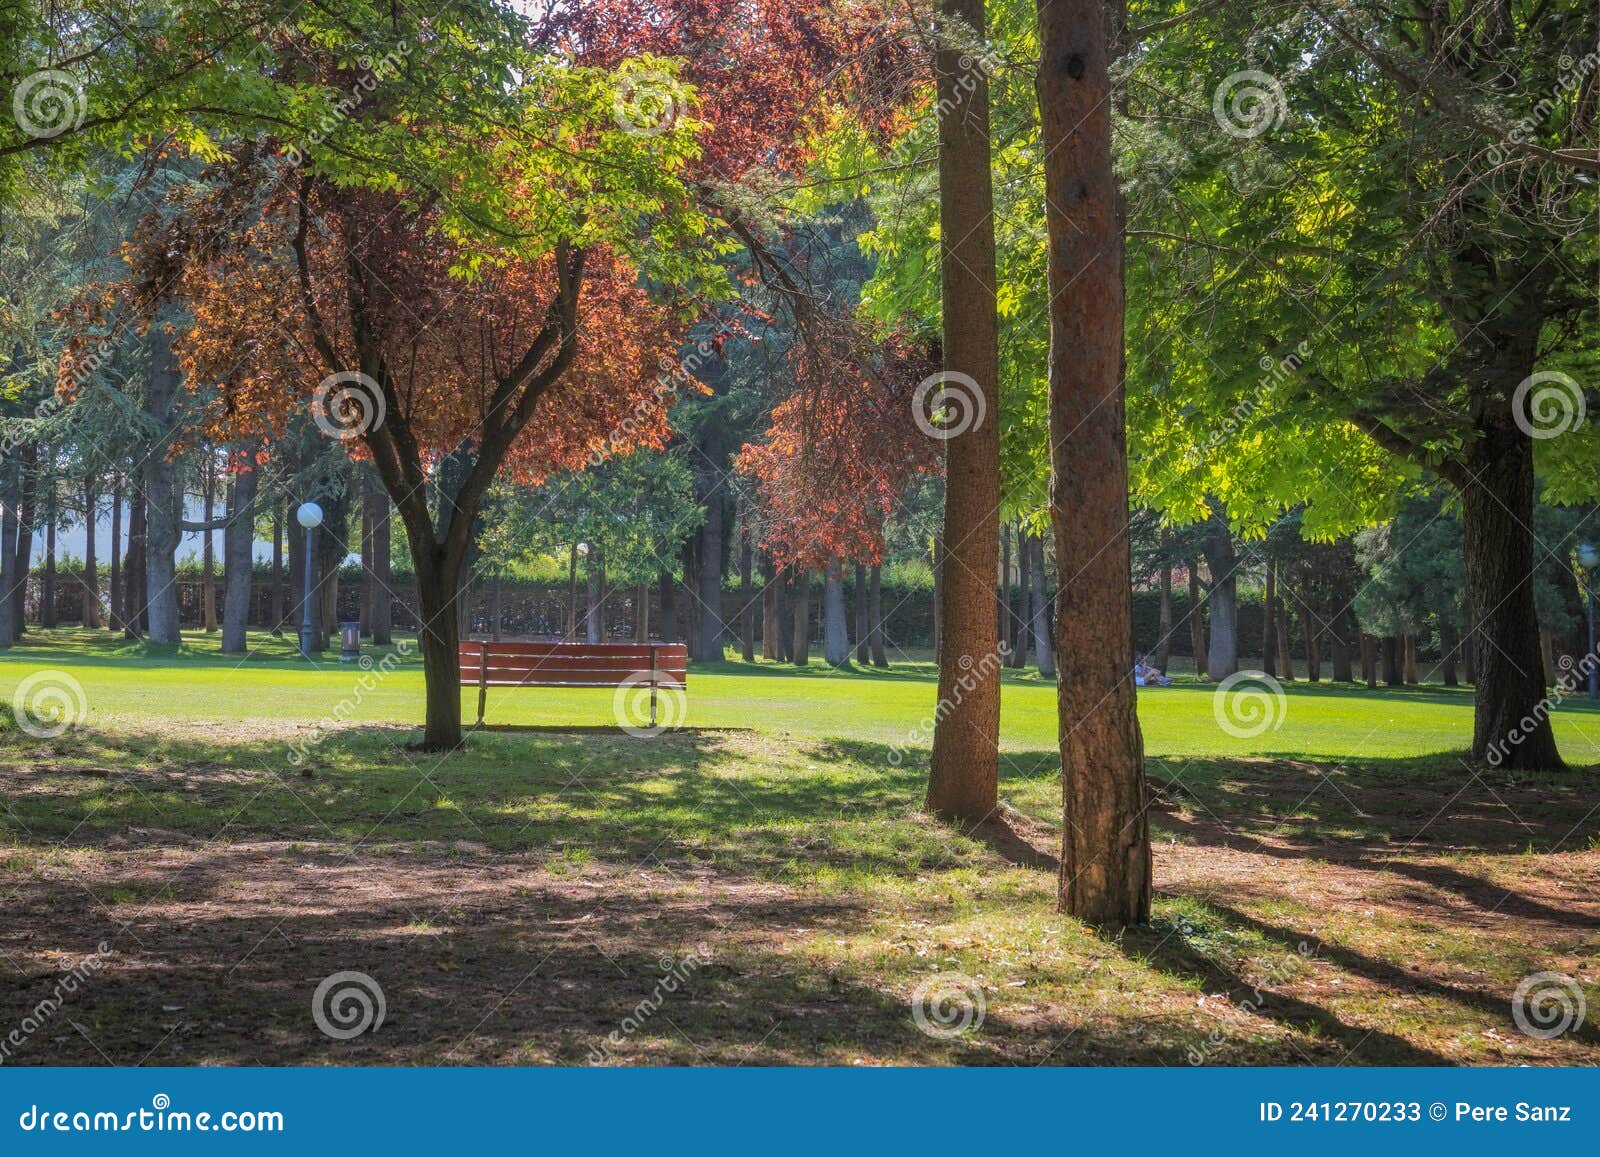 the alameda park in soria